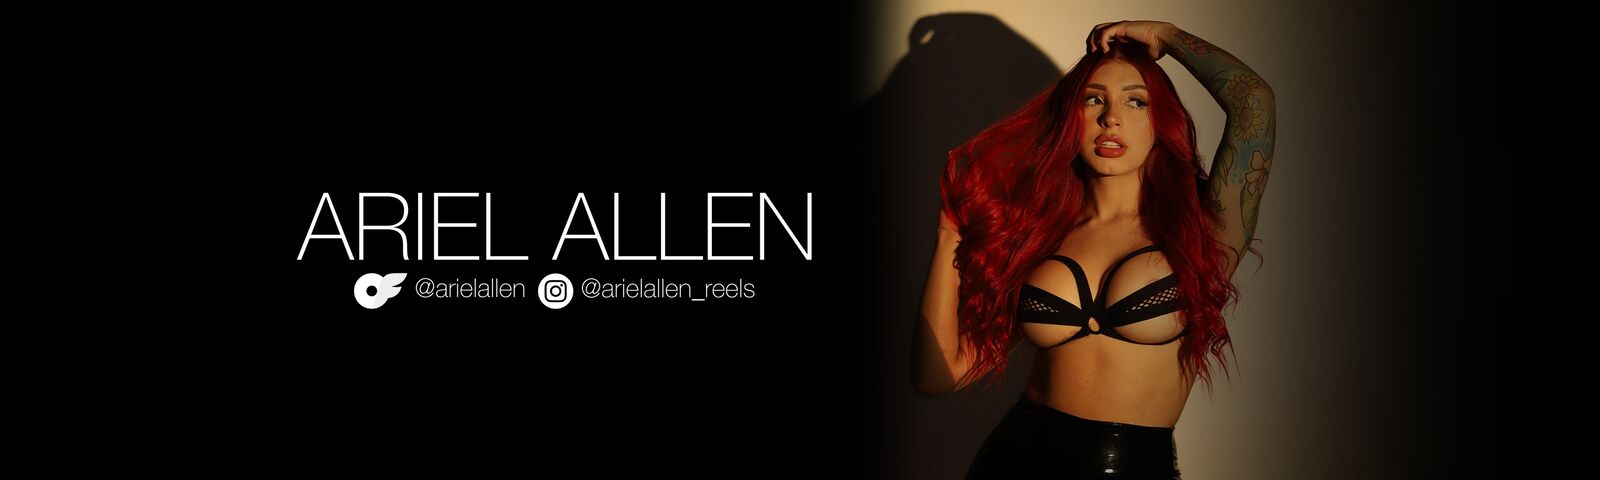 See Ariel Allen profile